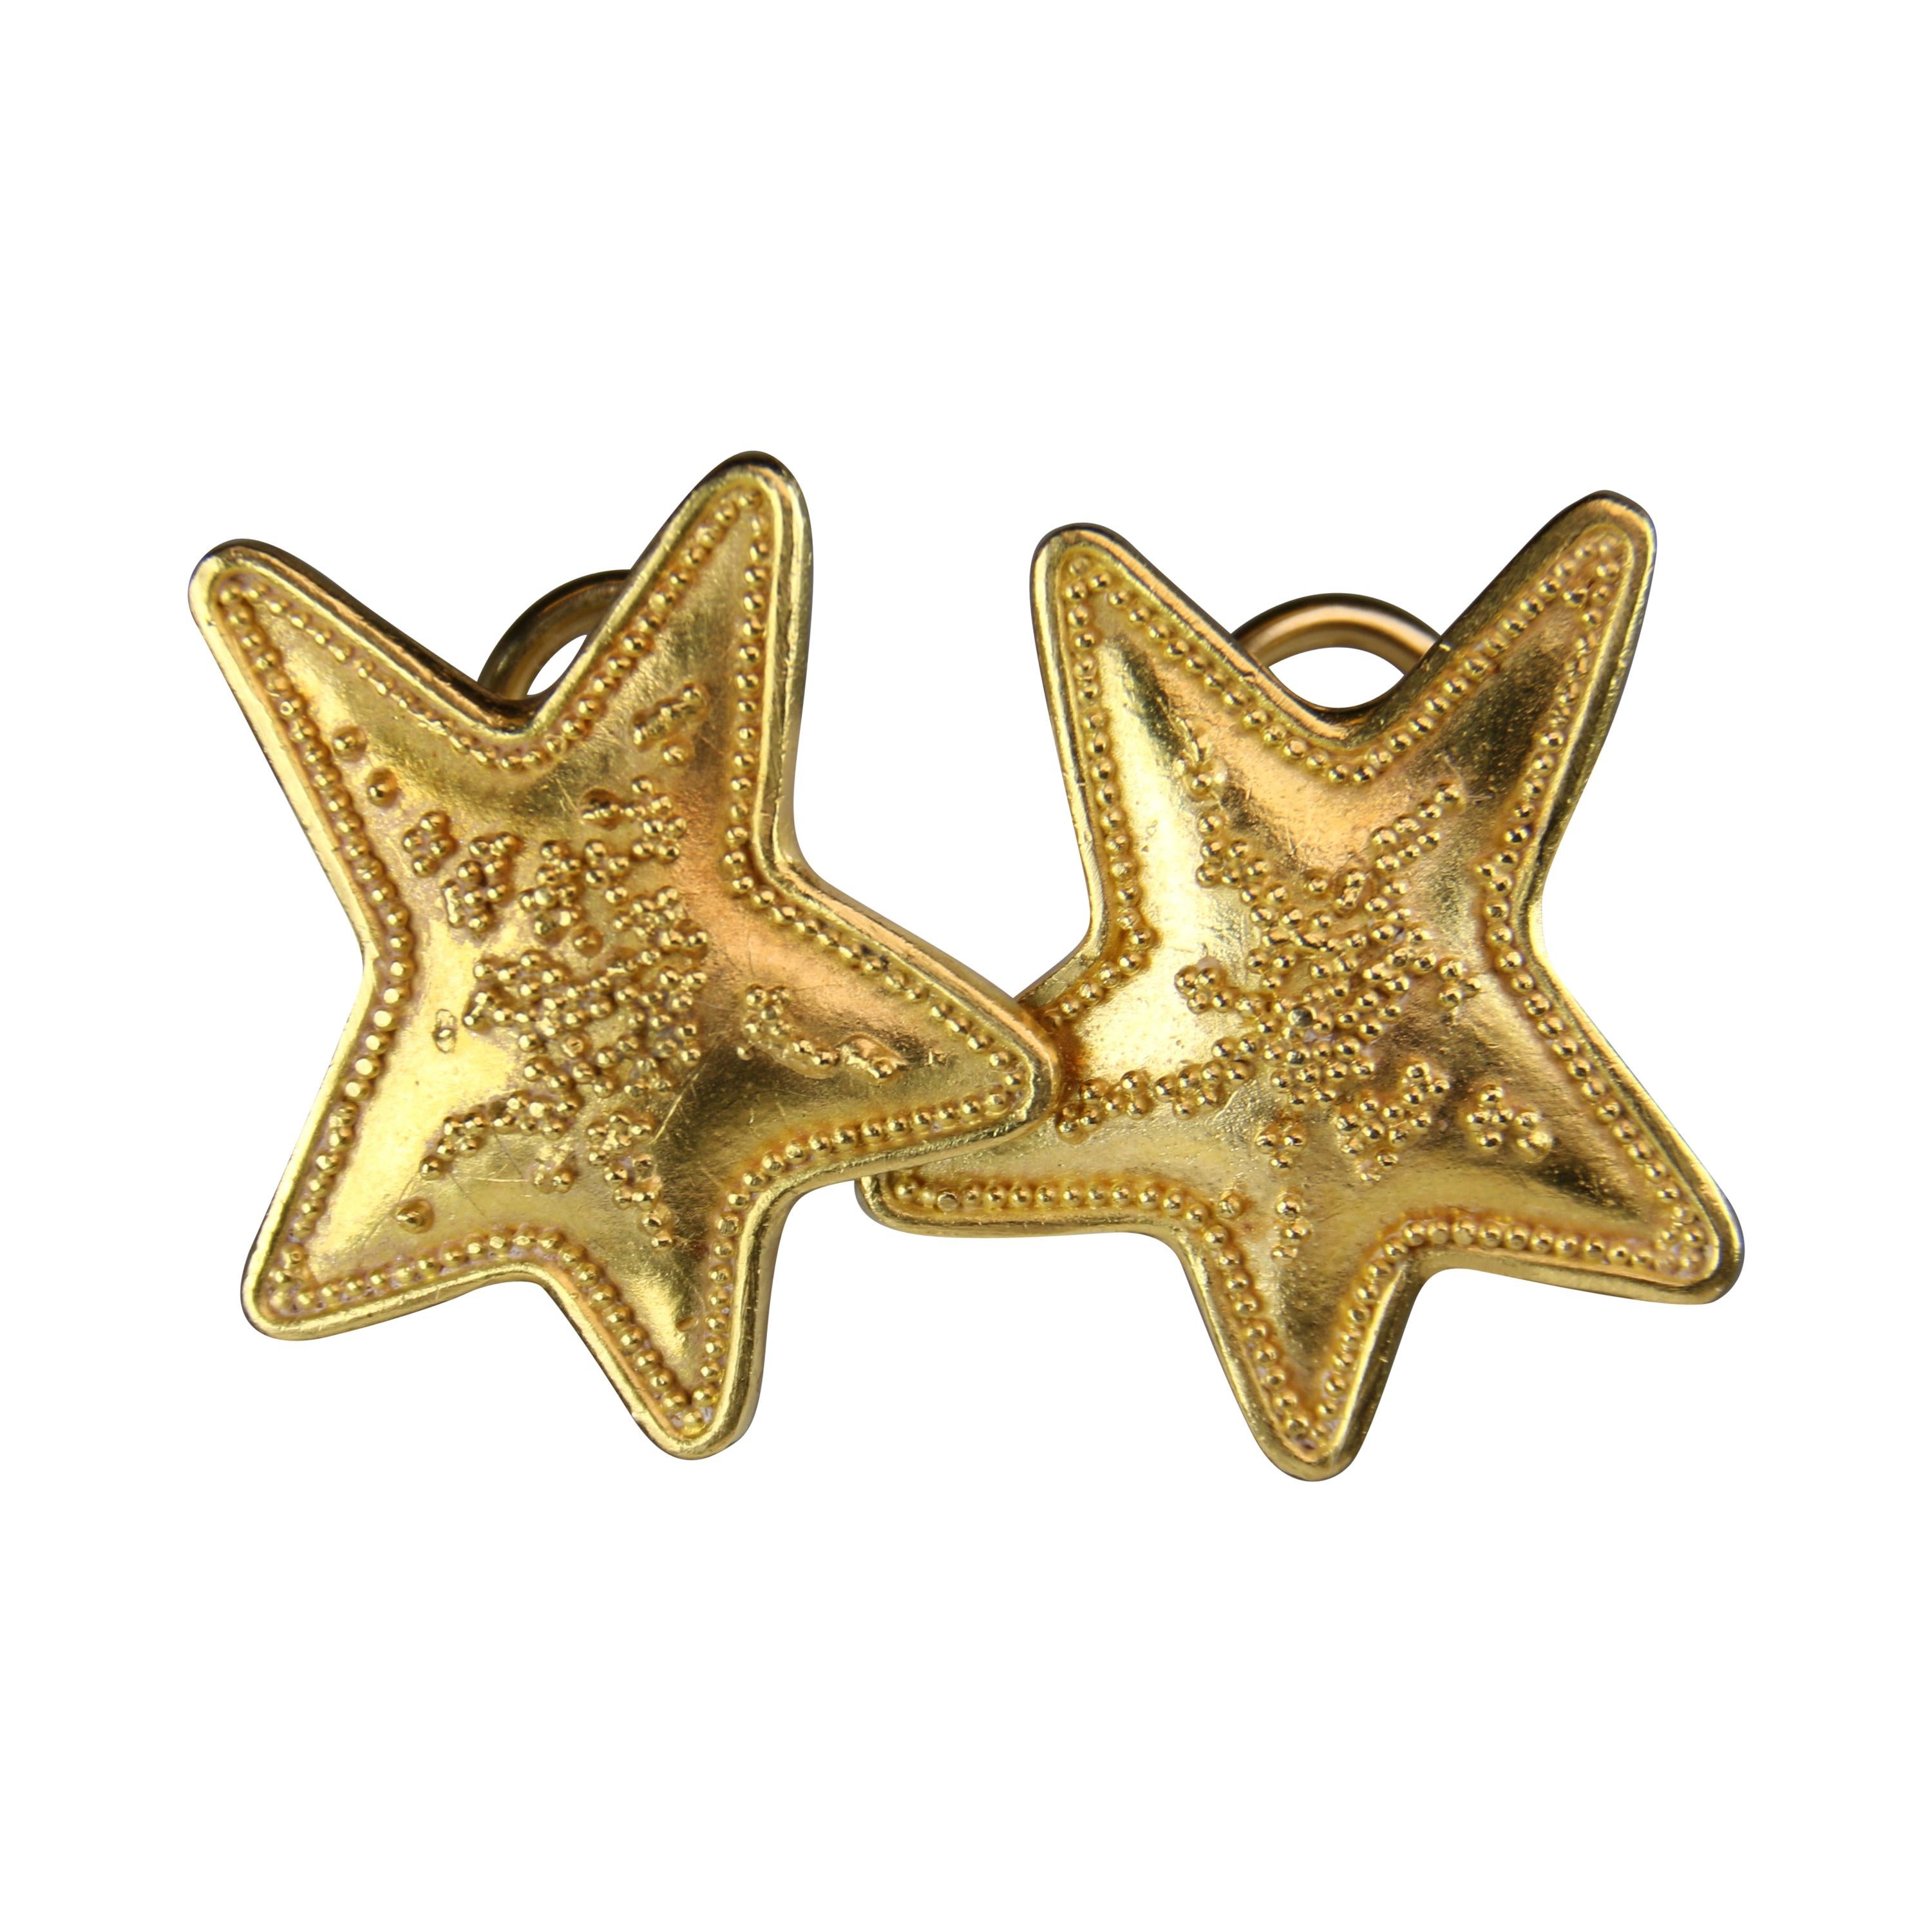 Maya Star Design Earrings - Handmade 22k 18k Yellow Gold with Granulation Signed